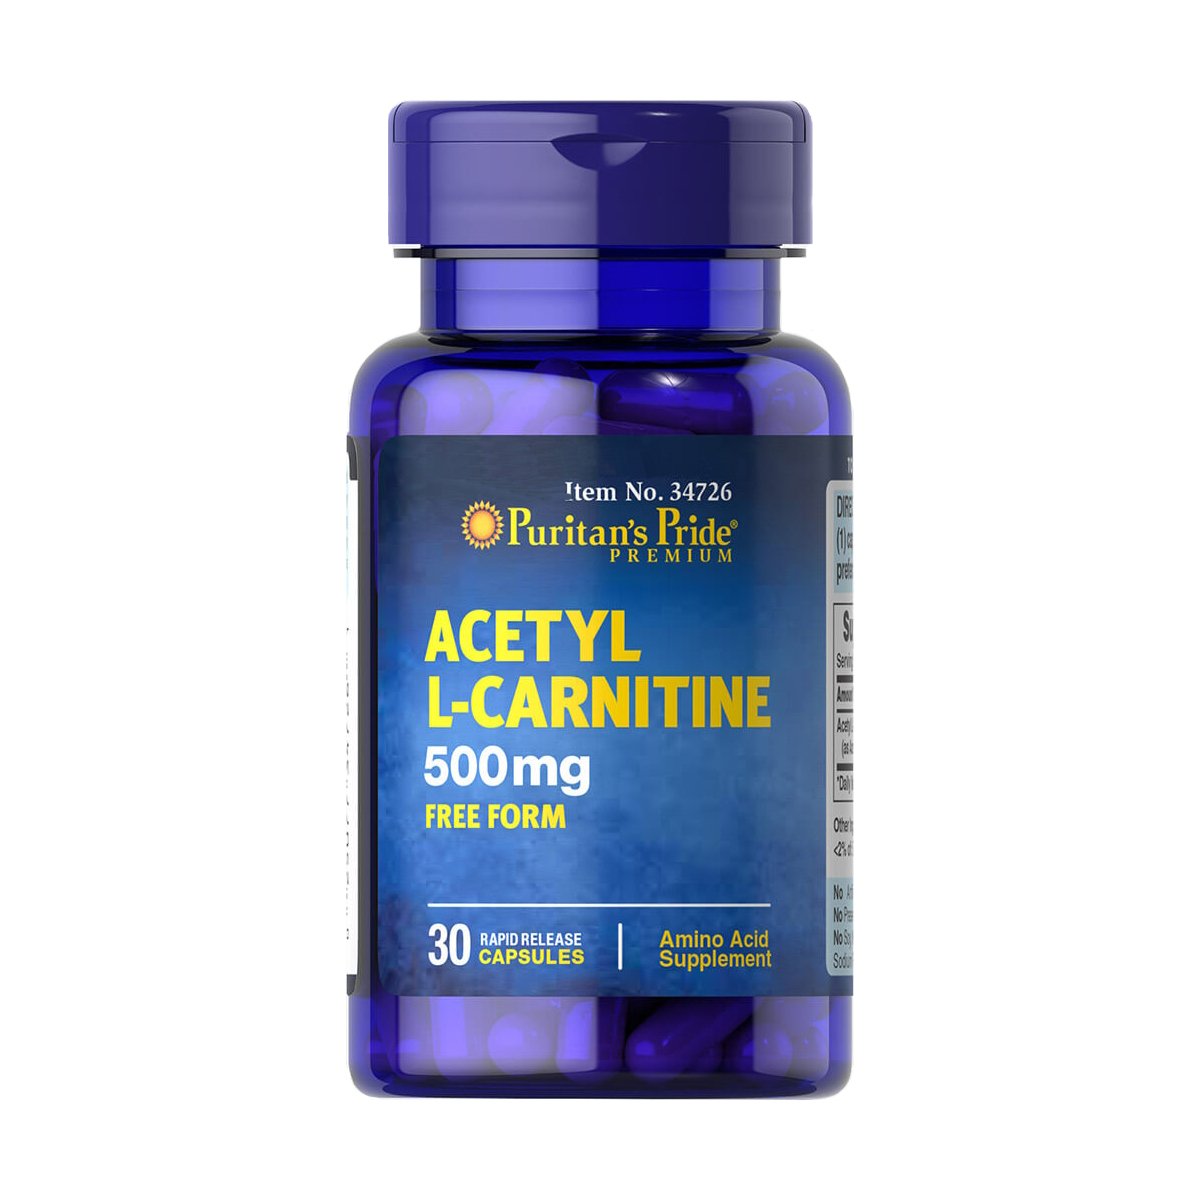 Жиросжигатель Puritan's Pride Acetyl L-Carnitine 500 mg, 30 капсул,  ml, Puritan's Pride. Quemador de grasa. Weight Loss Fat burning 